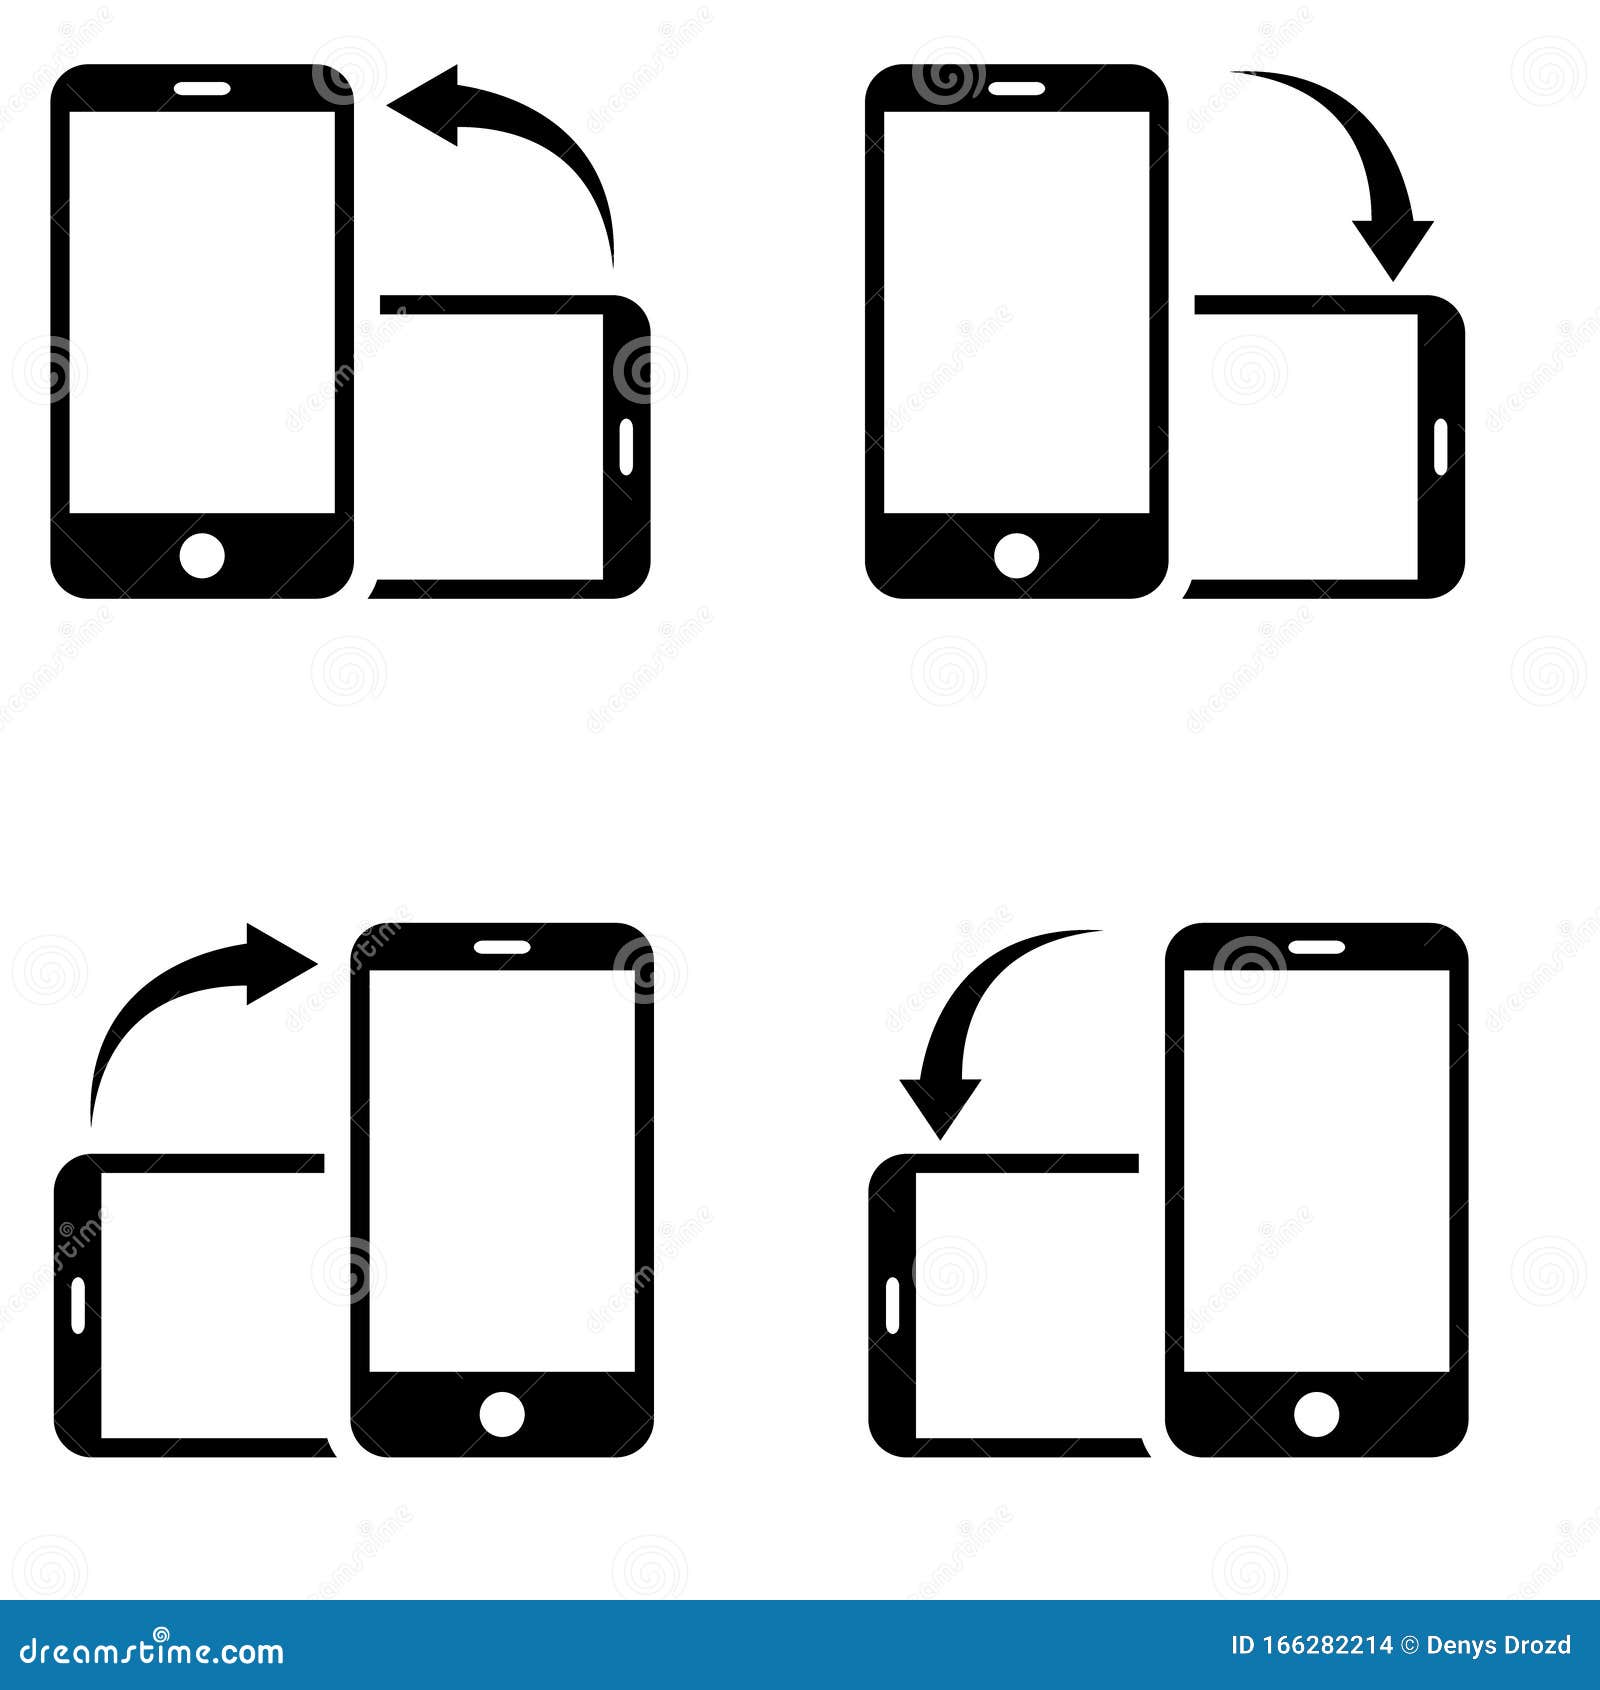 rotate-smartphone-vector-icon-device-rotation-illustration-symbol